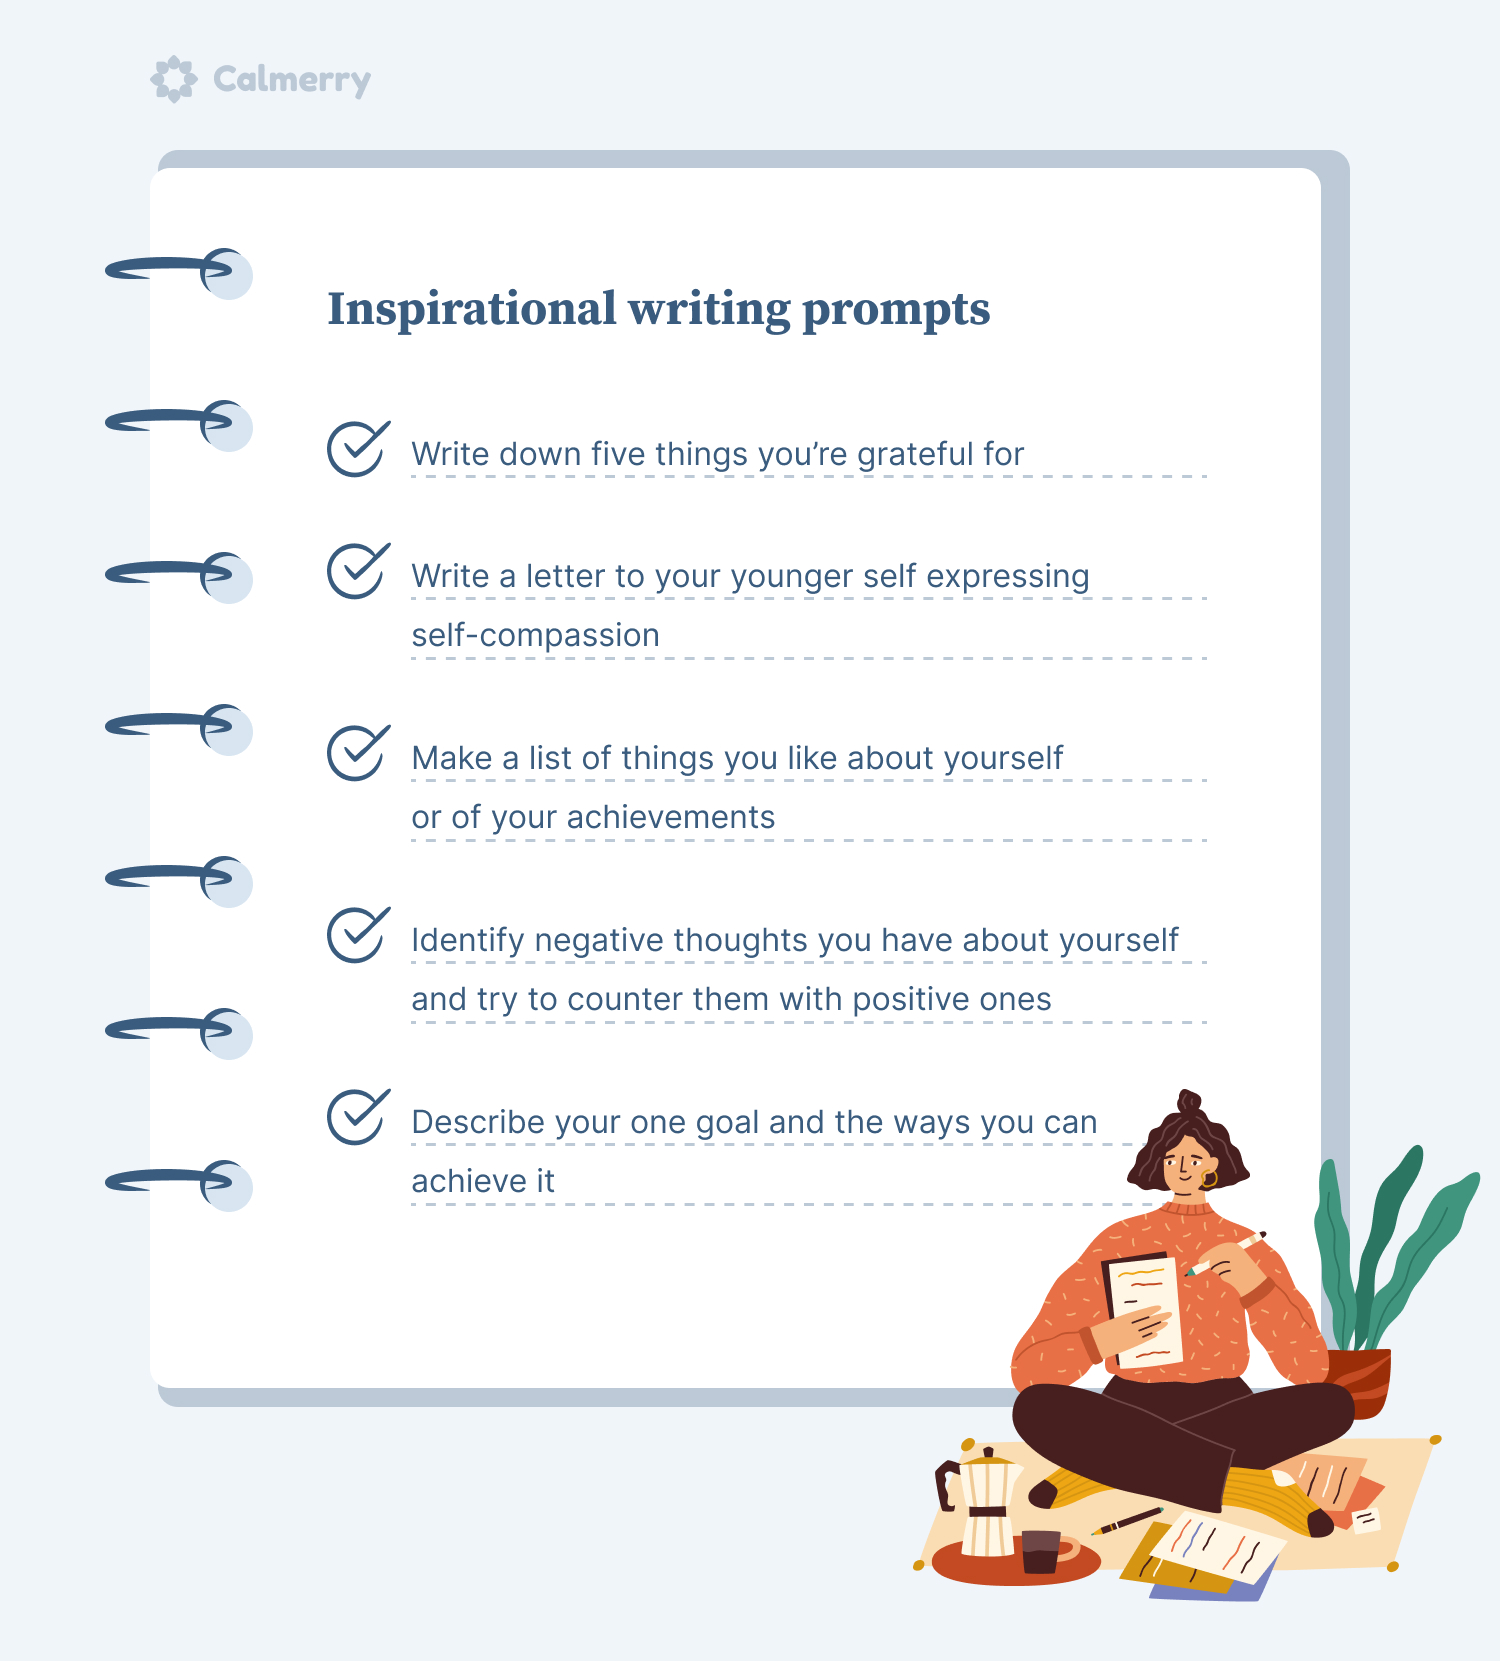 nspirational writing prompts